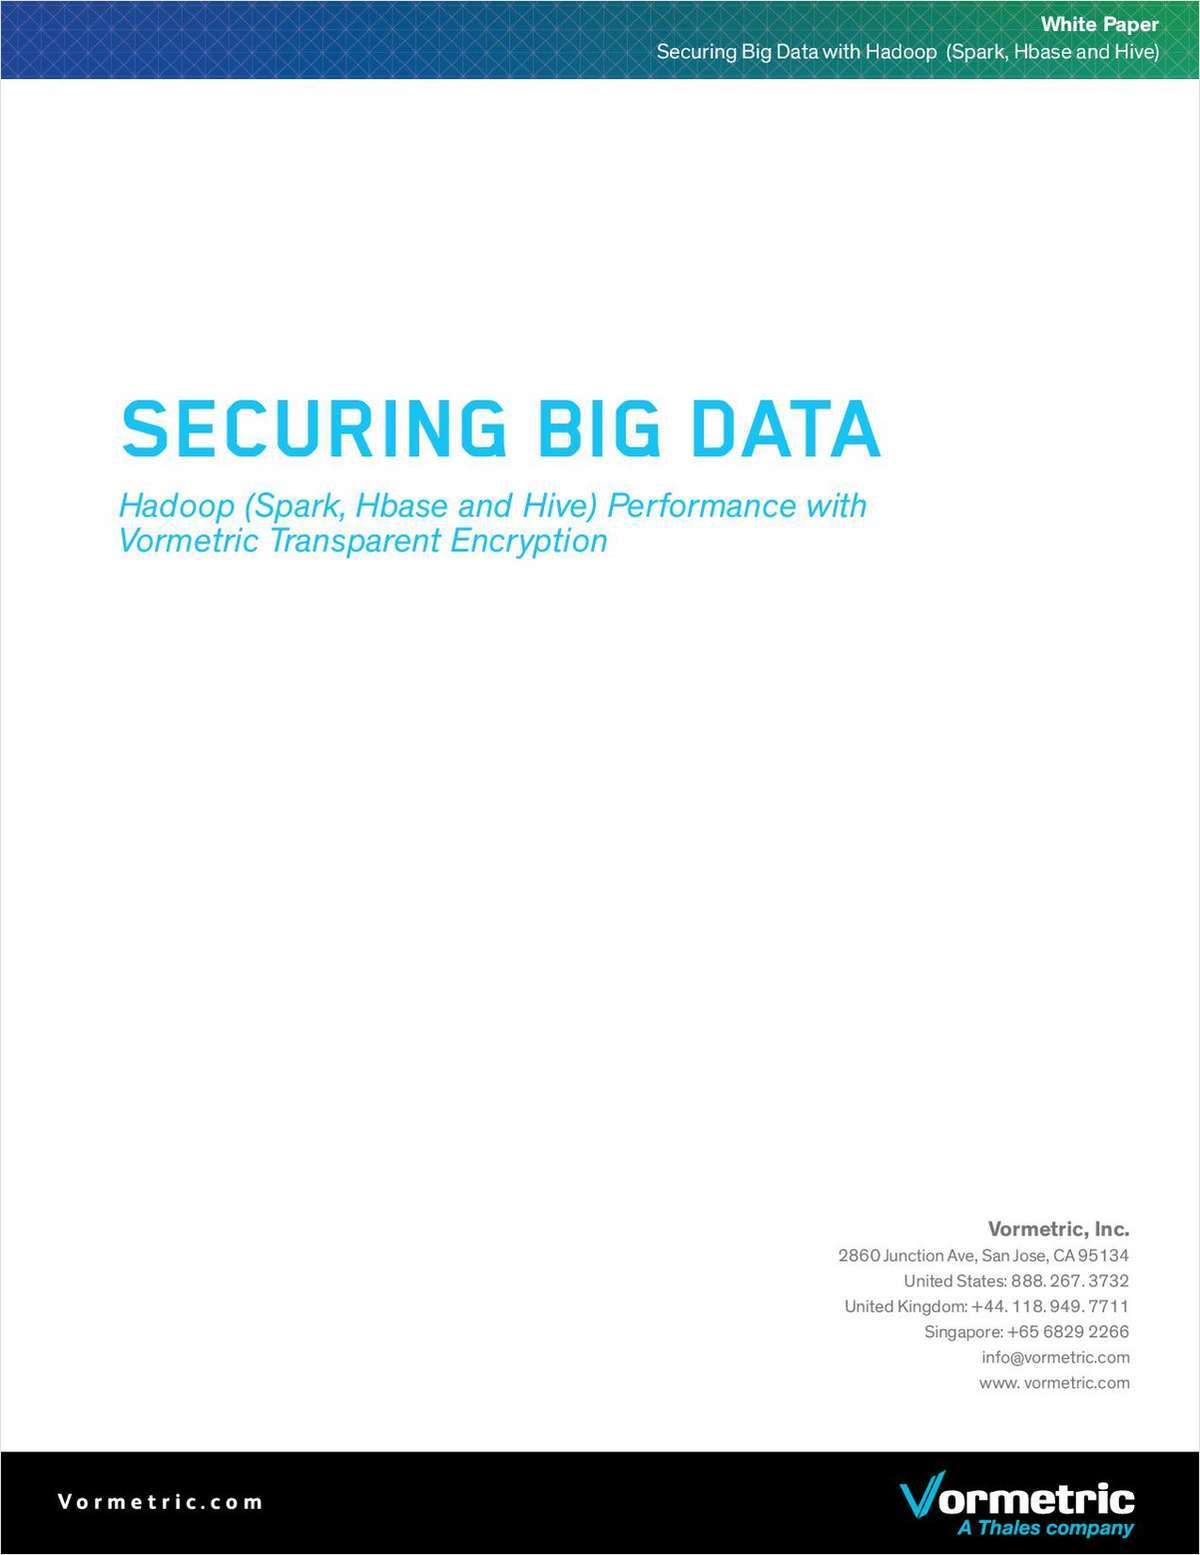 Securing Big Data: Hadoop Performance with Vormetric Transparent Encryption